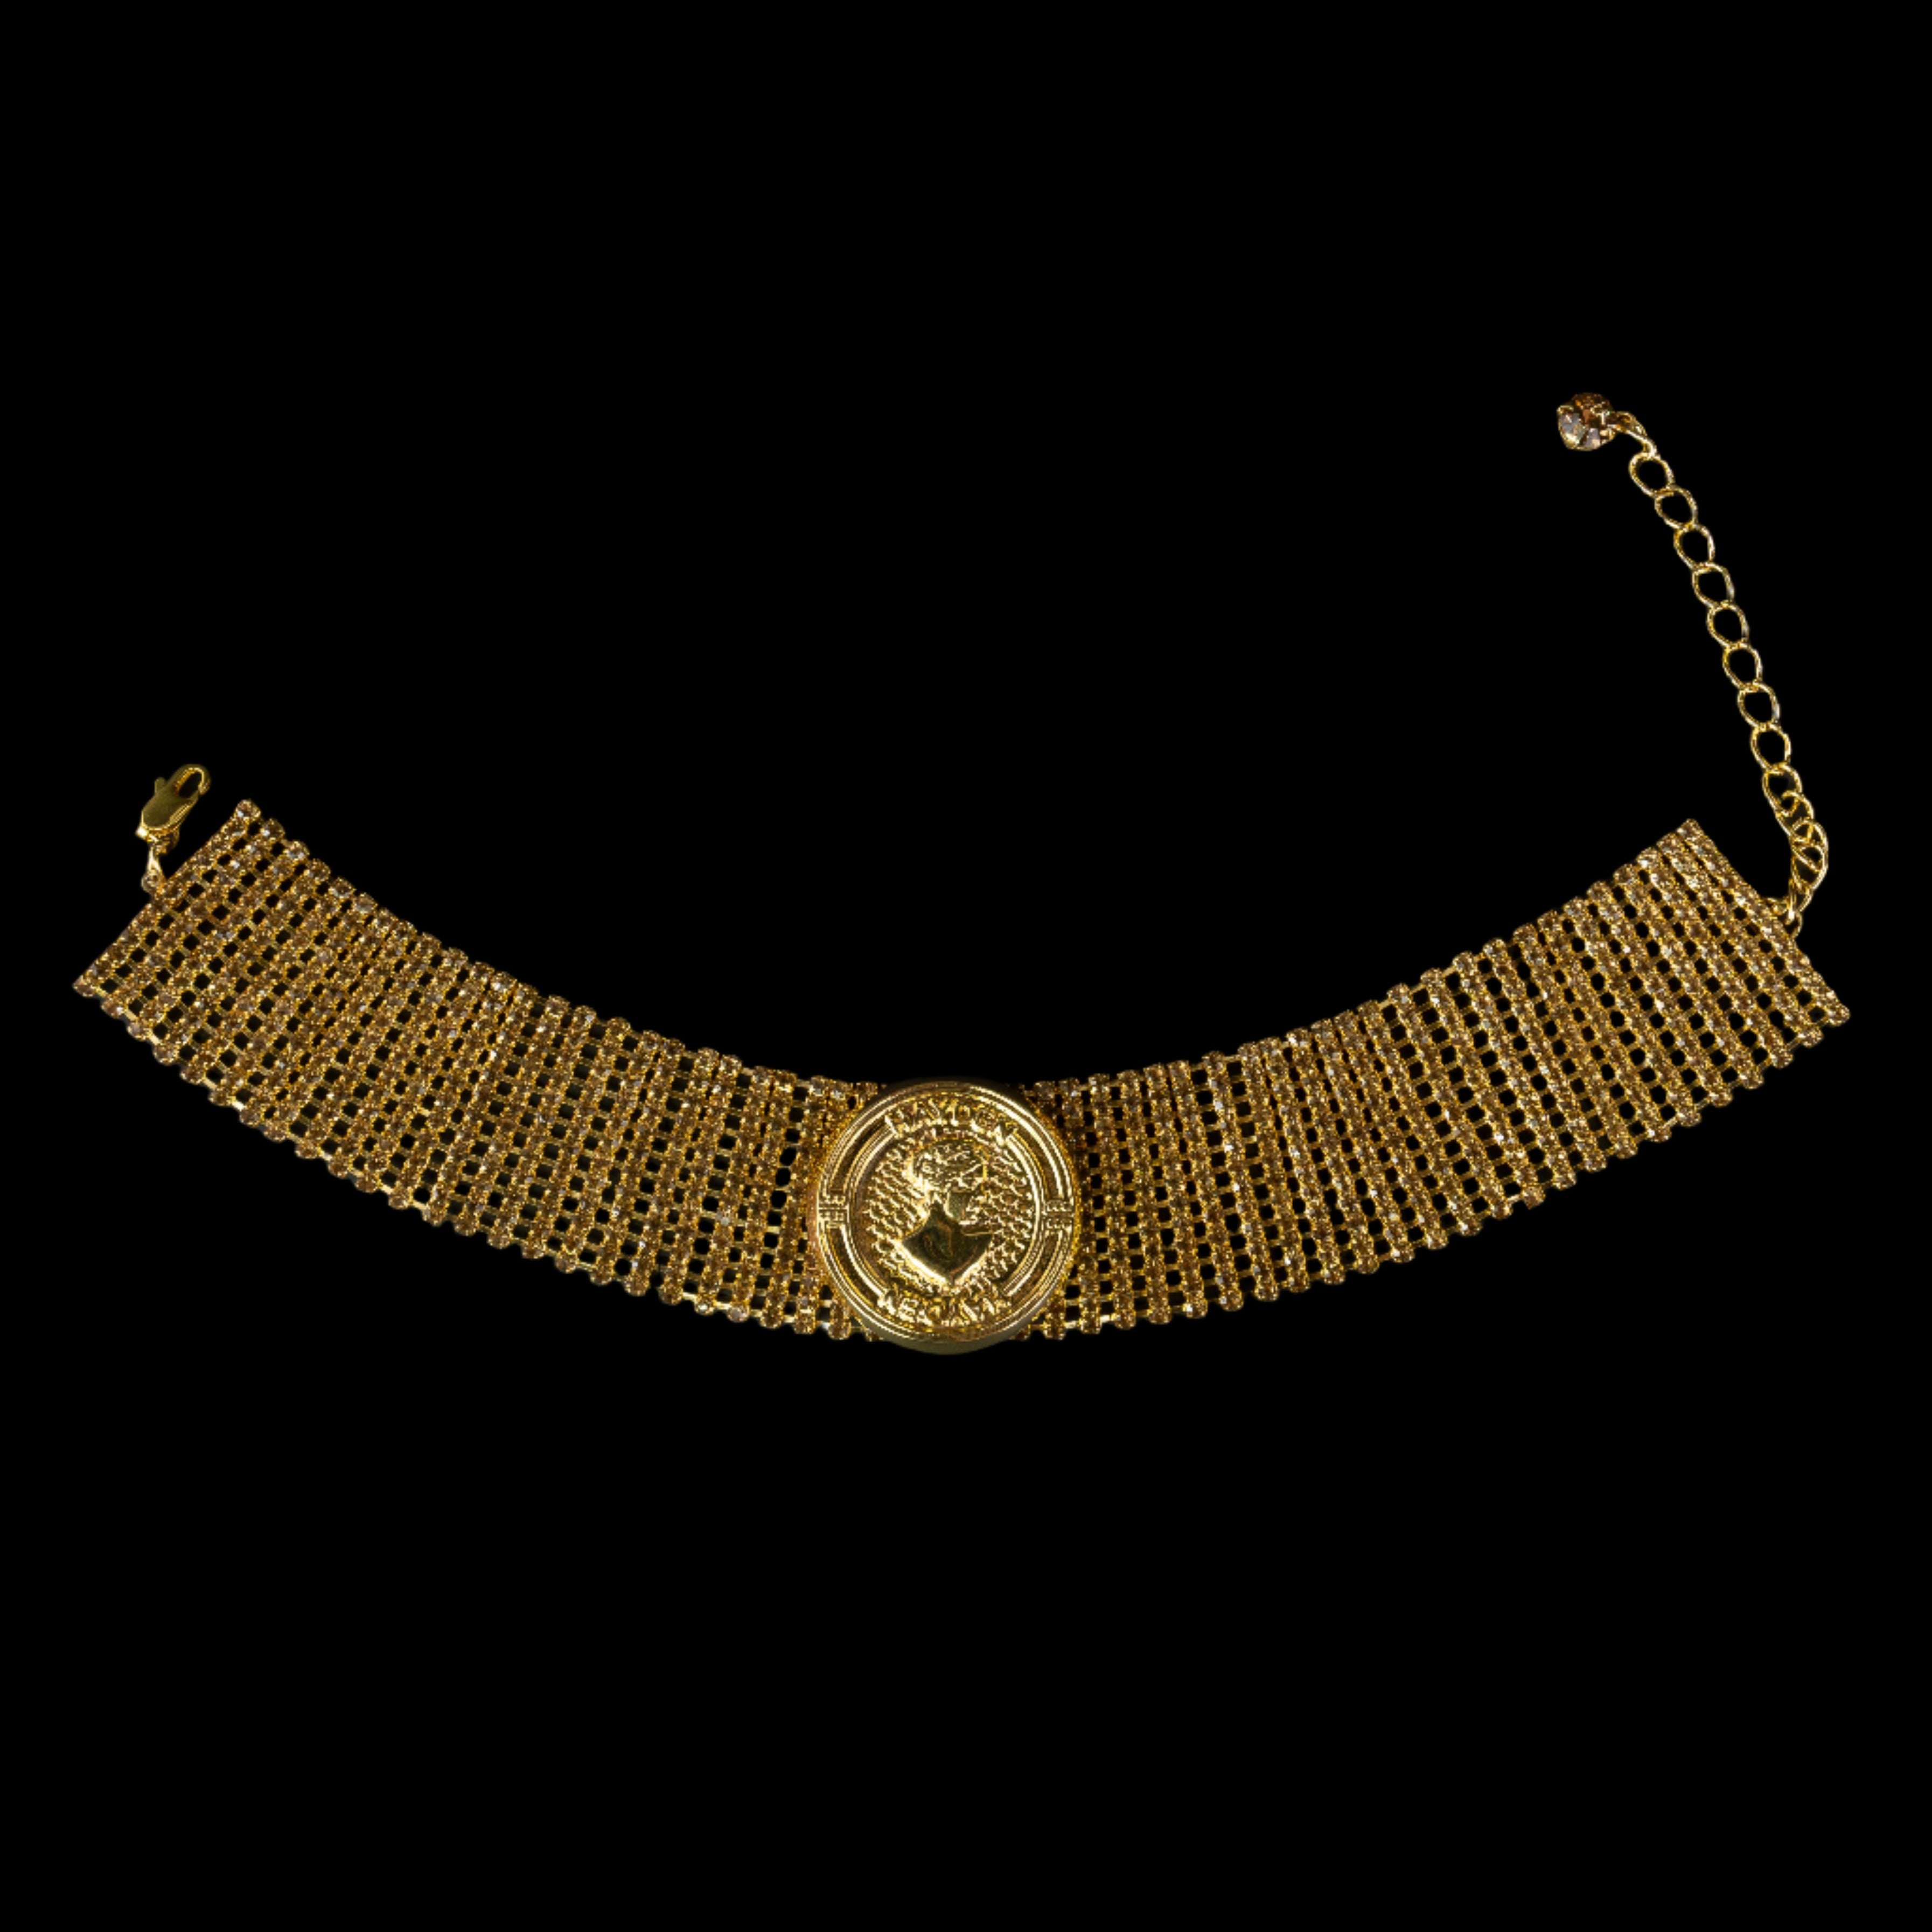 Hera Bra chain in Gold